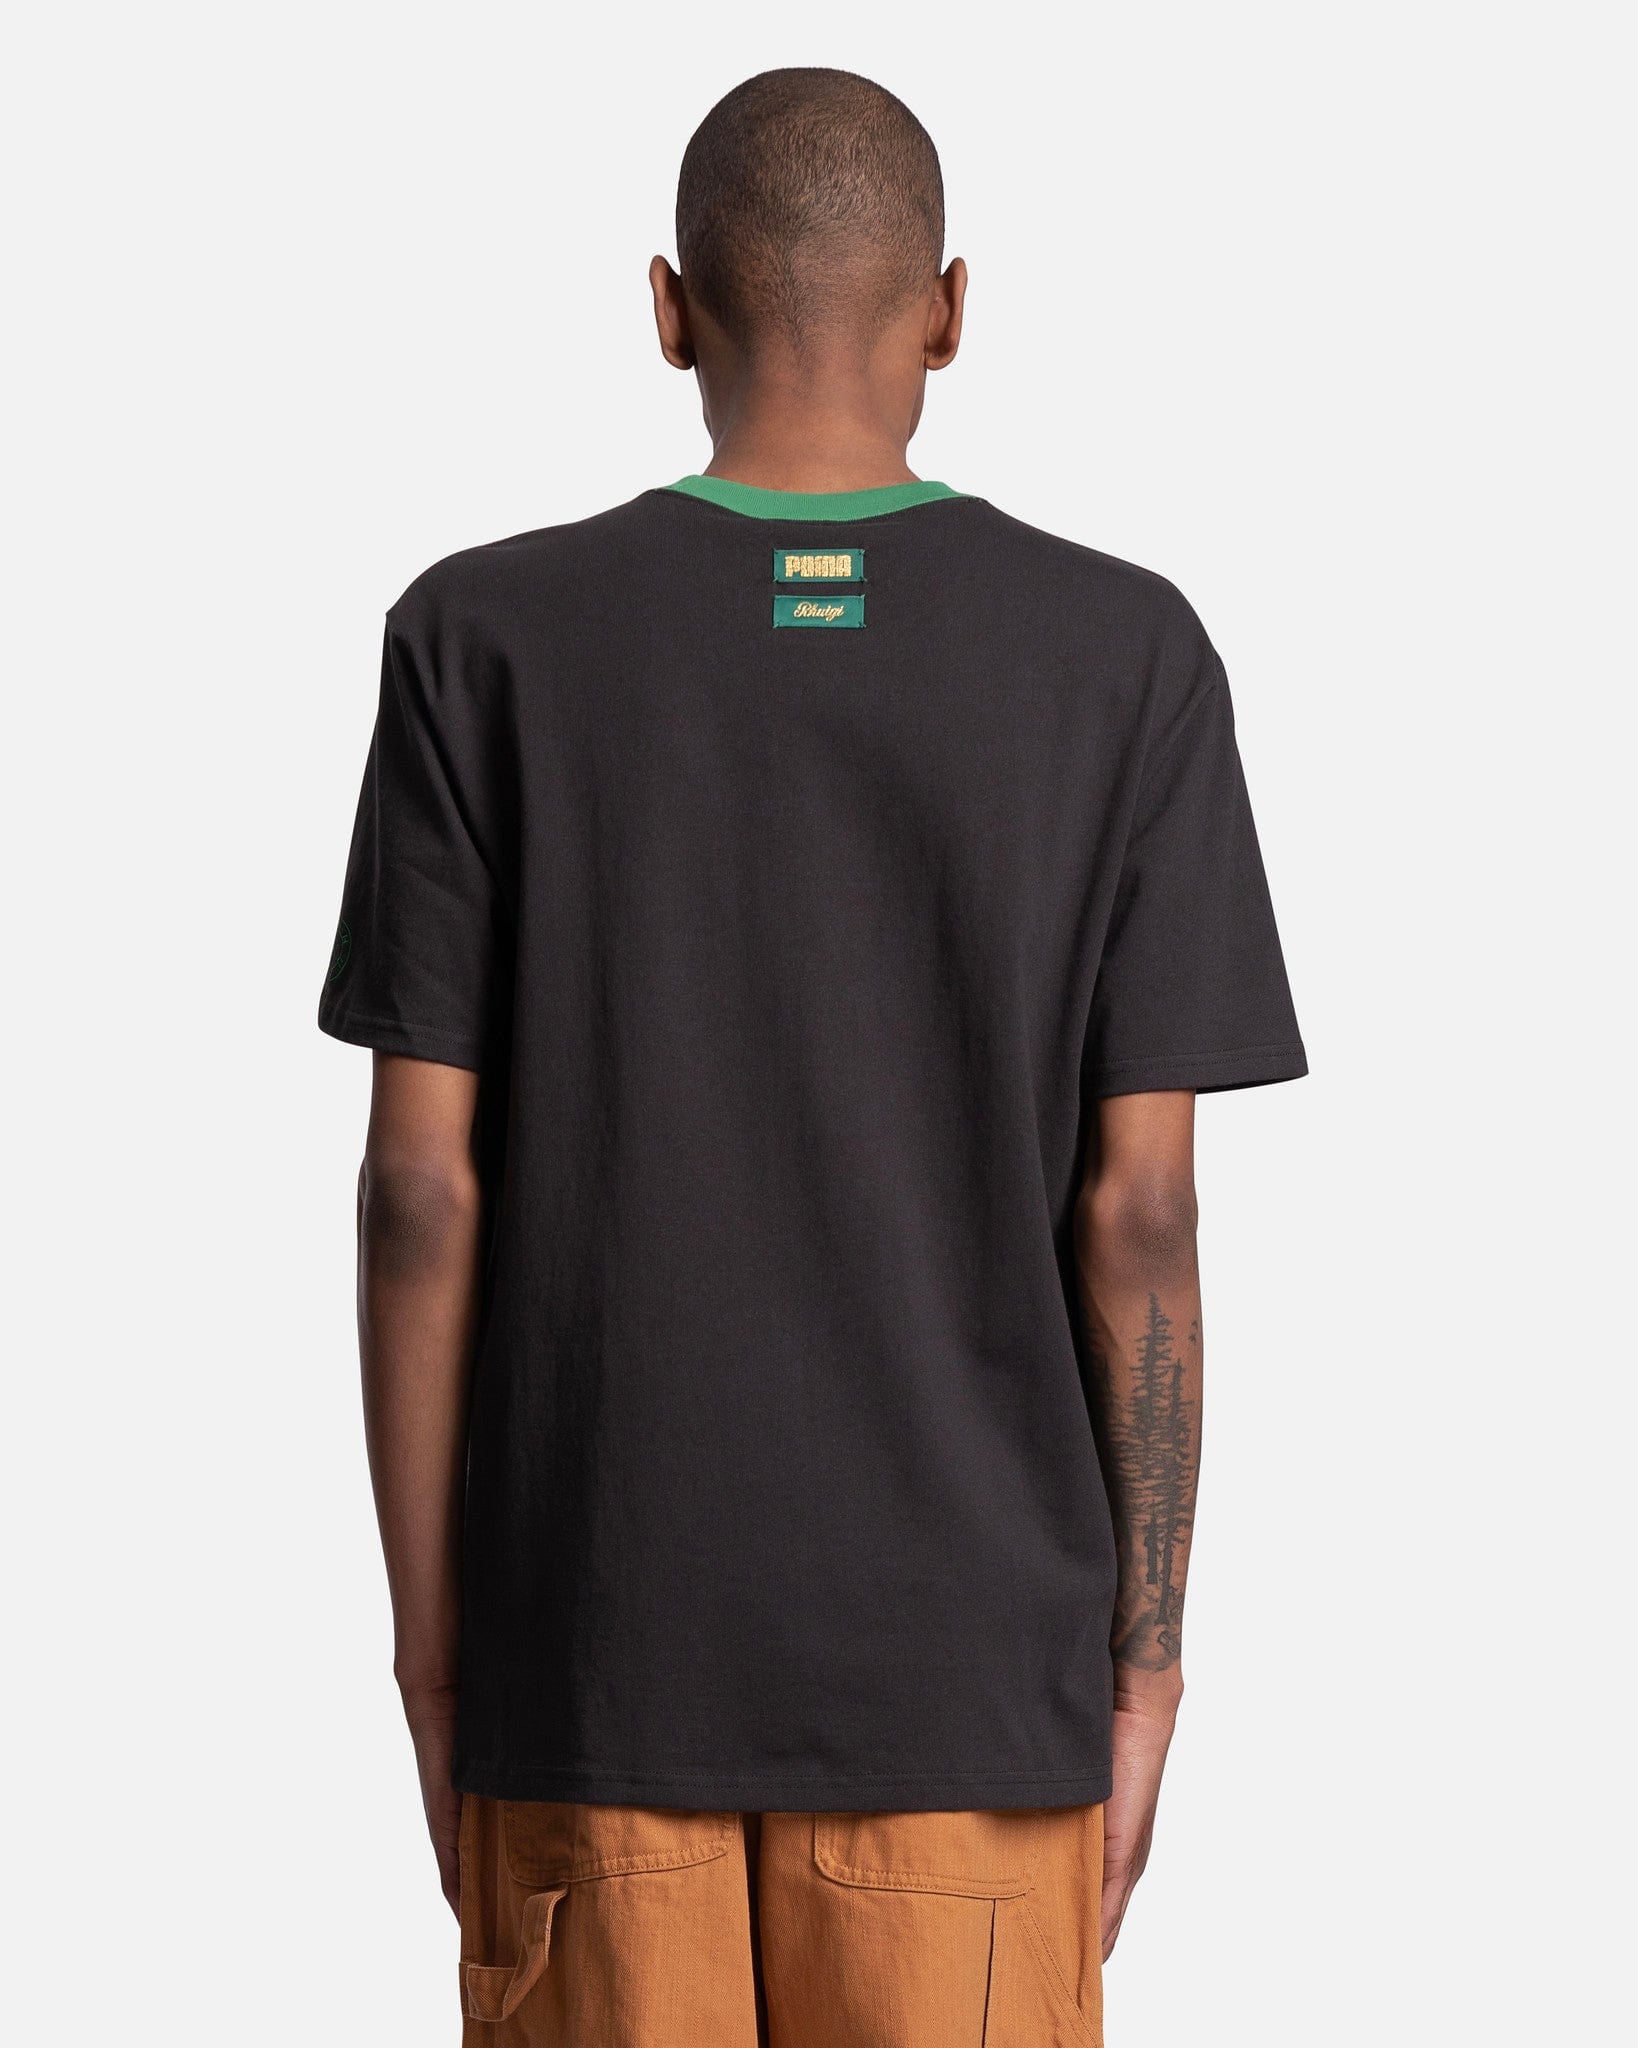 Puma Men's T-Shirts Rhuigi Graphic T-Shirt in Black/Green